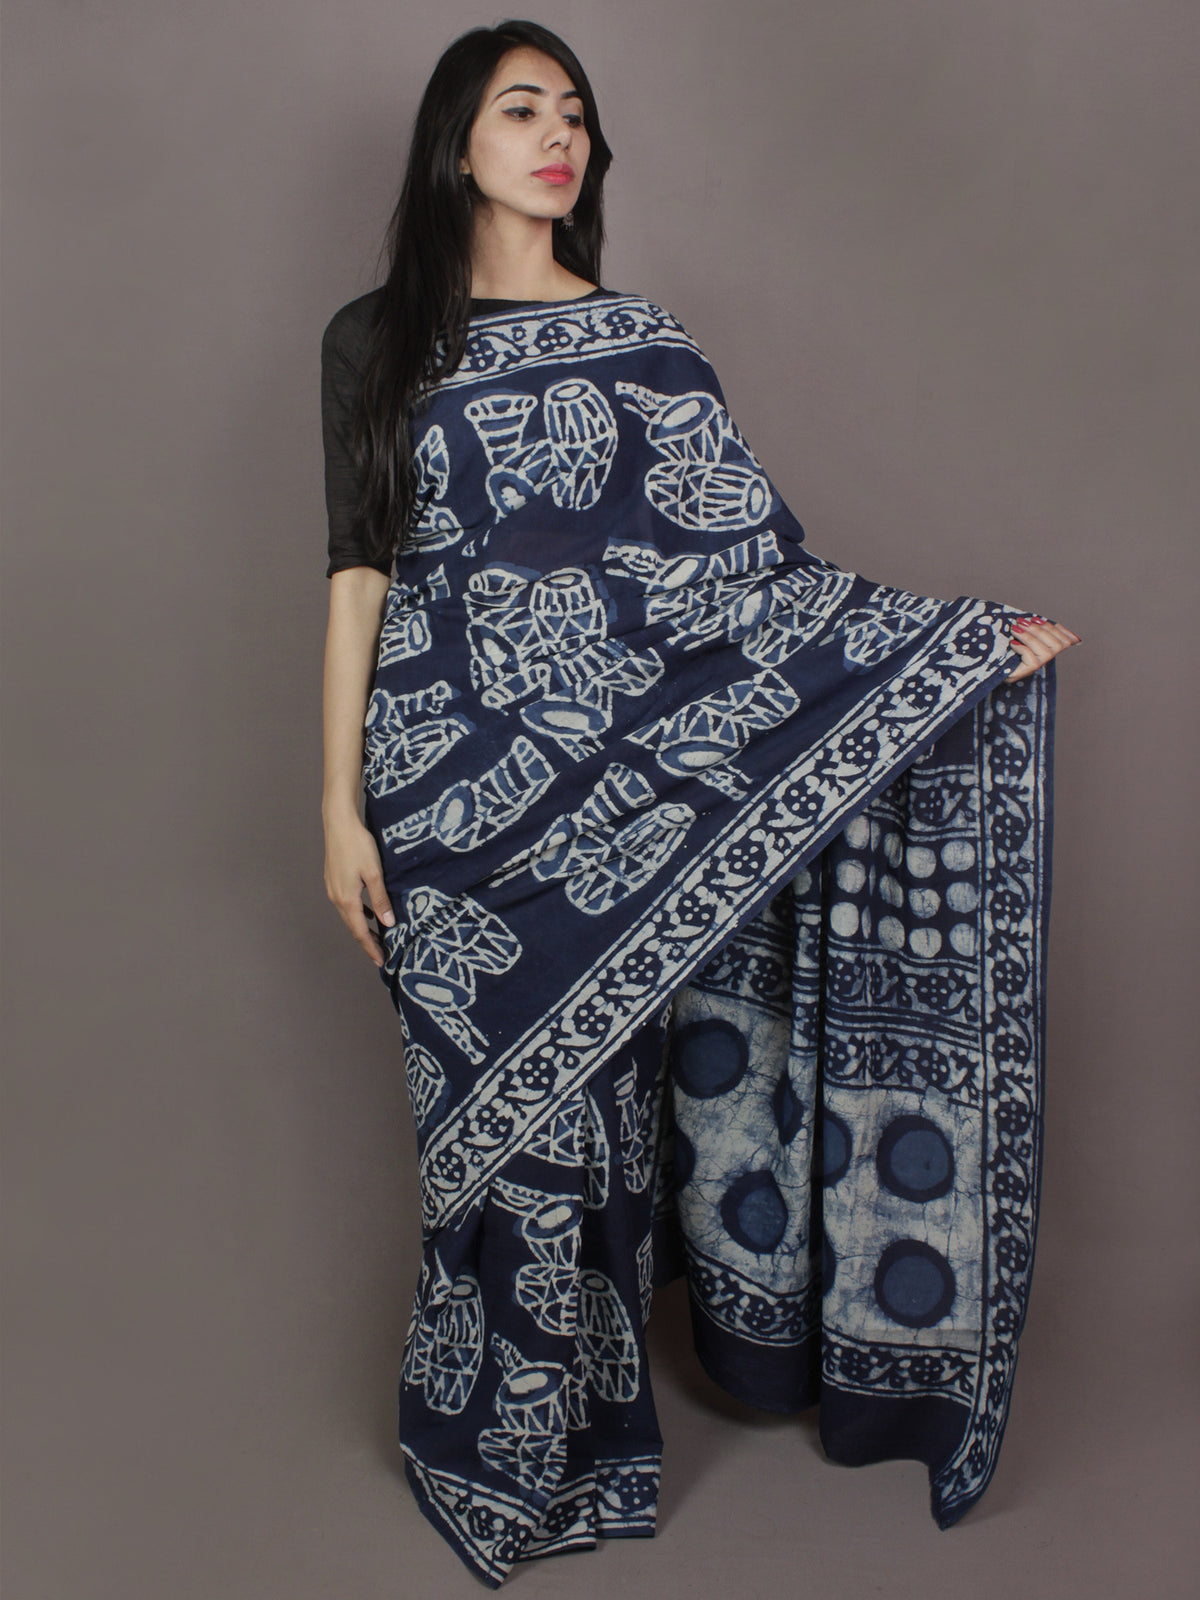 Indigo Cotton Hand Block Printed Saree in Natural Colors - S03170247